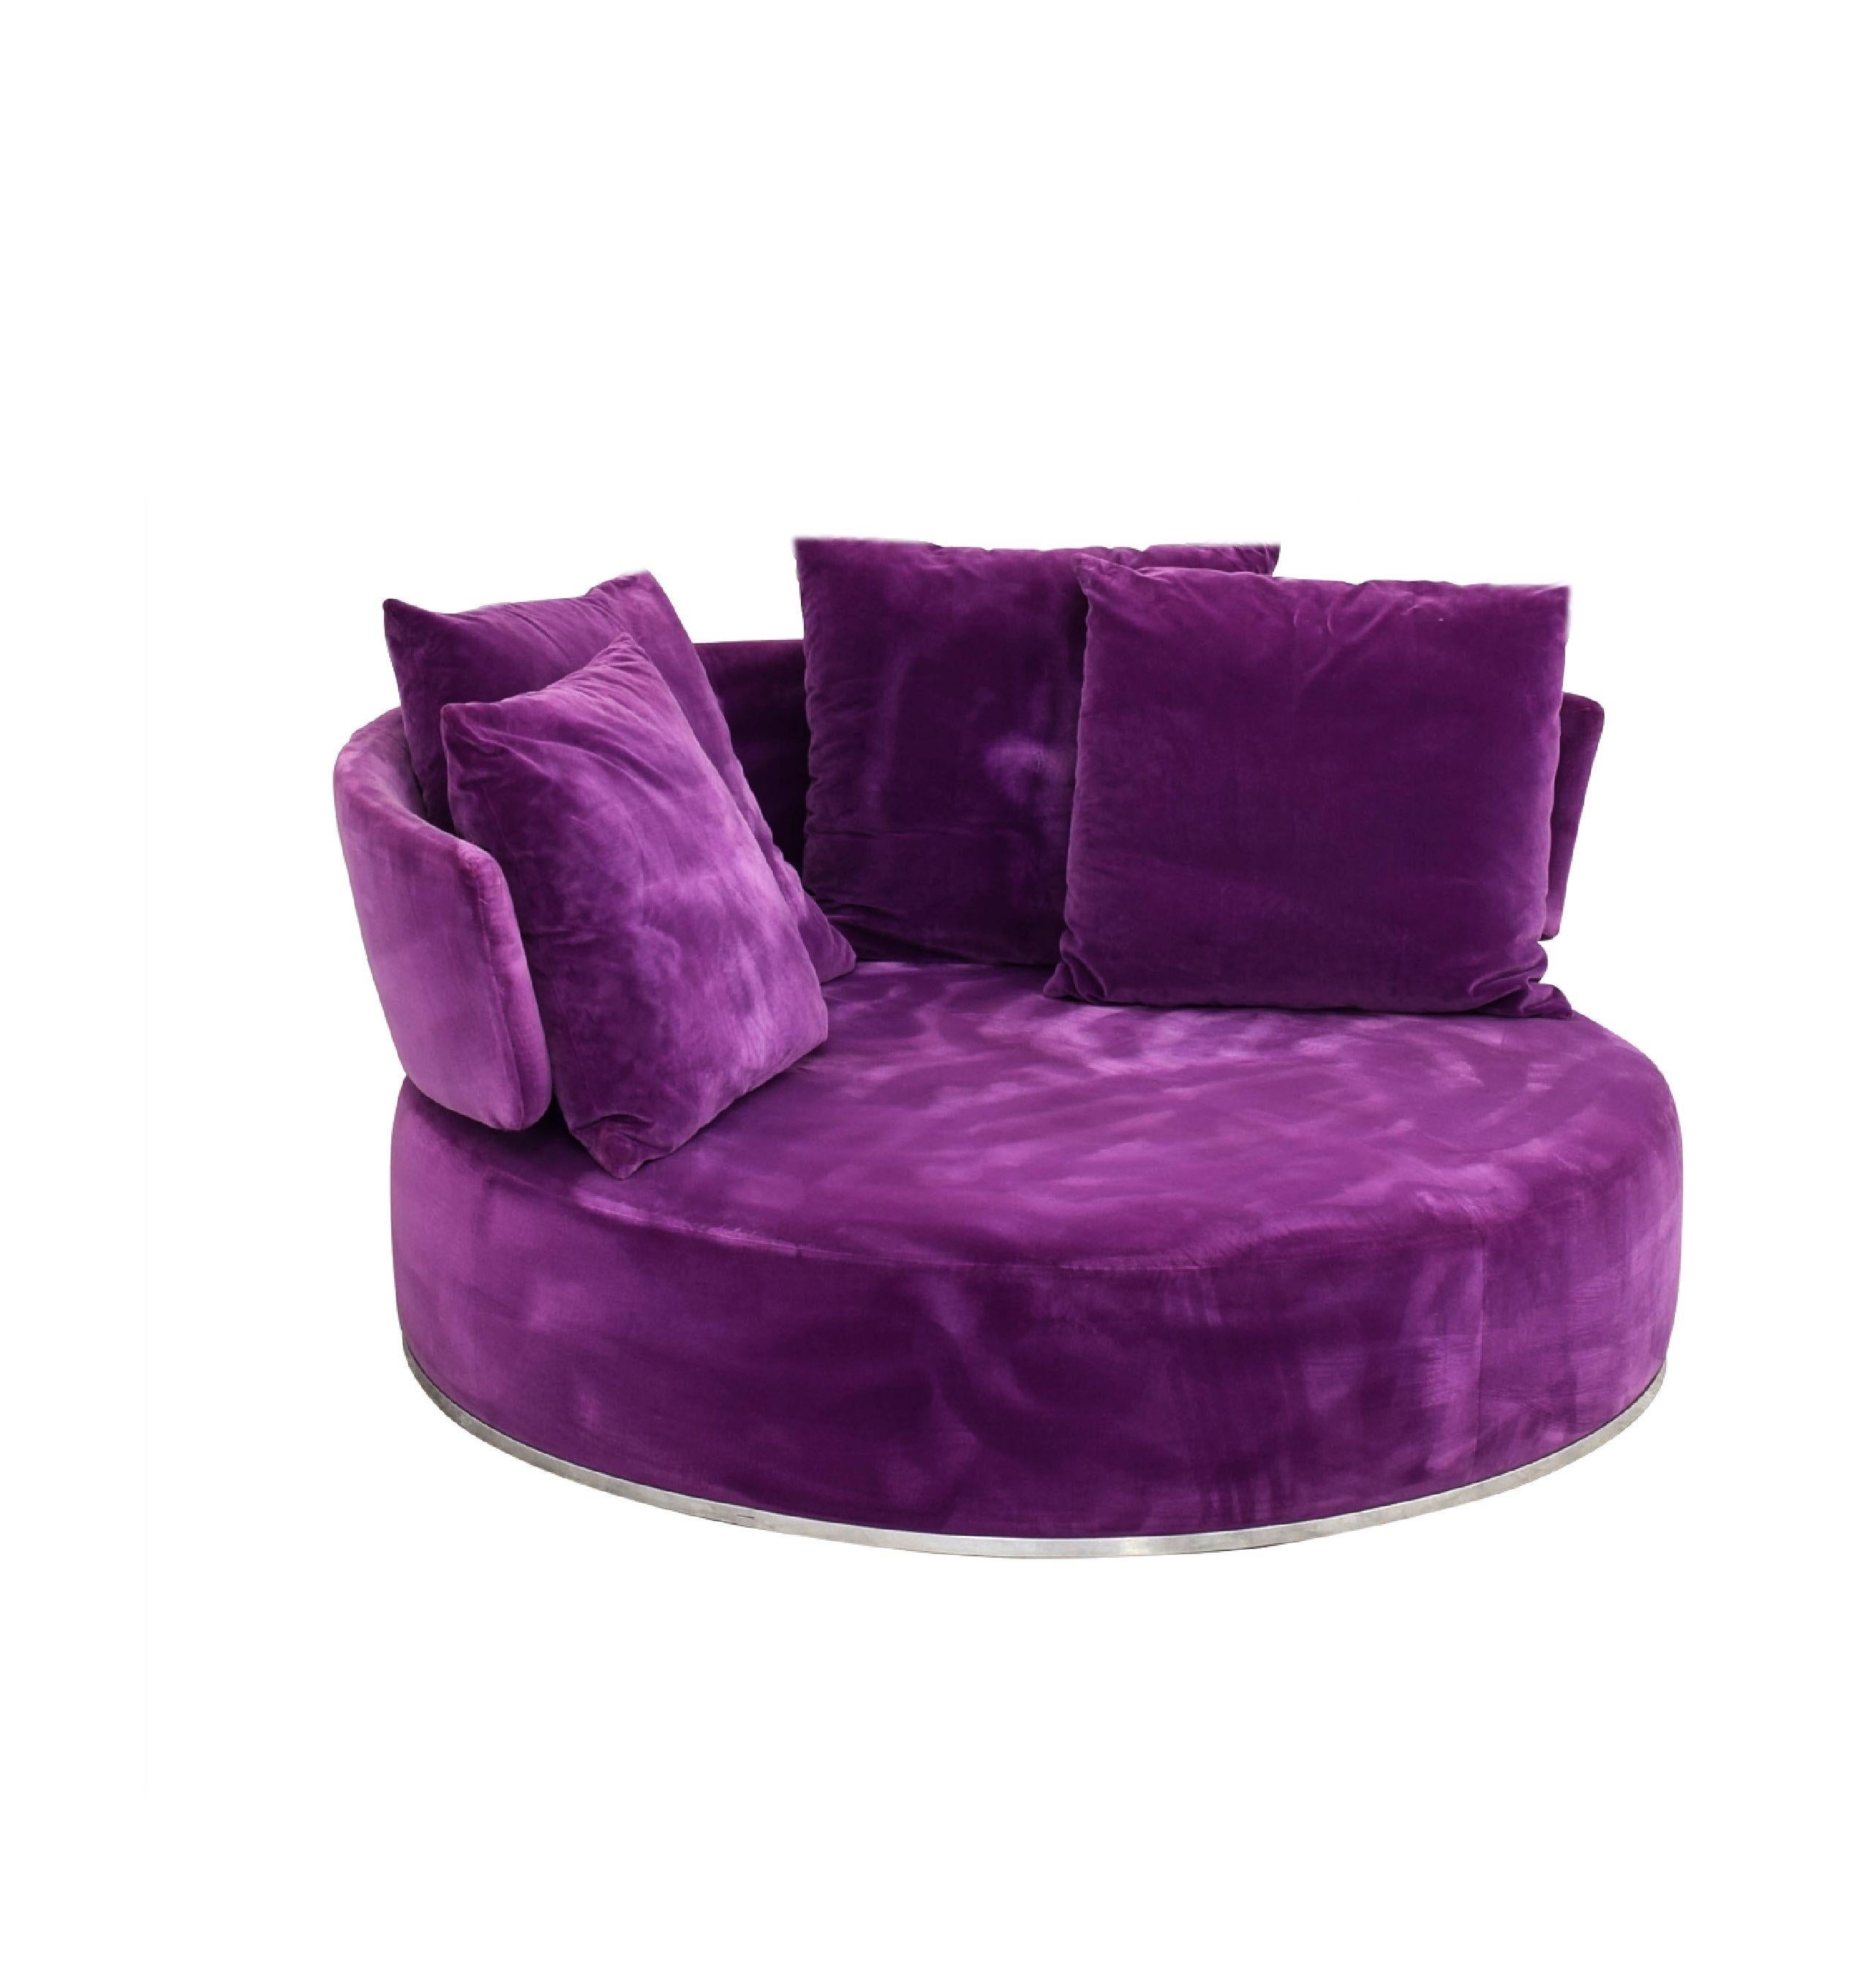 Round soft swivel sofa, B&B Italia, circular Amoenus loveseat, purple, Fuschia.

Iconic “Amoenus” circular, rotating sofa by Antonio Citterio part of the “Maxalto” range from the Italian furniture house of B&B Italia. MSRP was over 11,000 USD. No